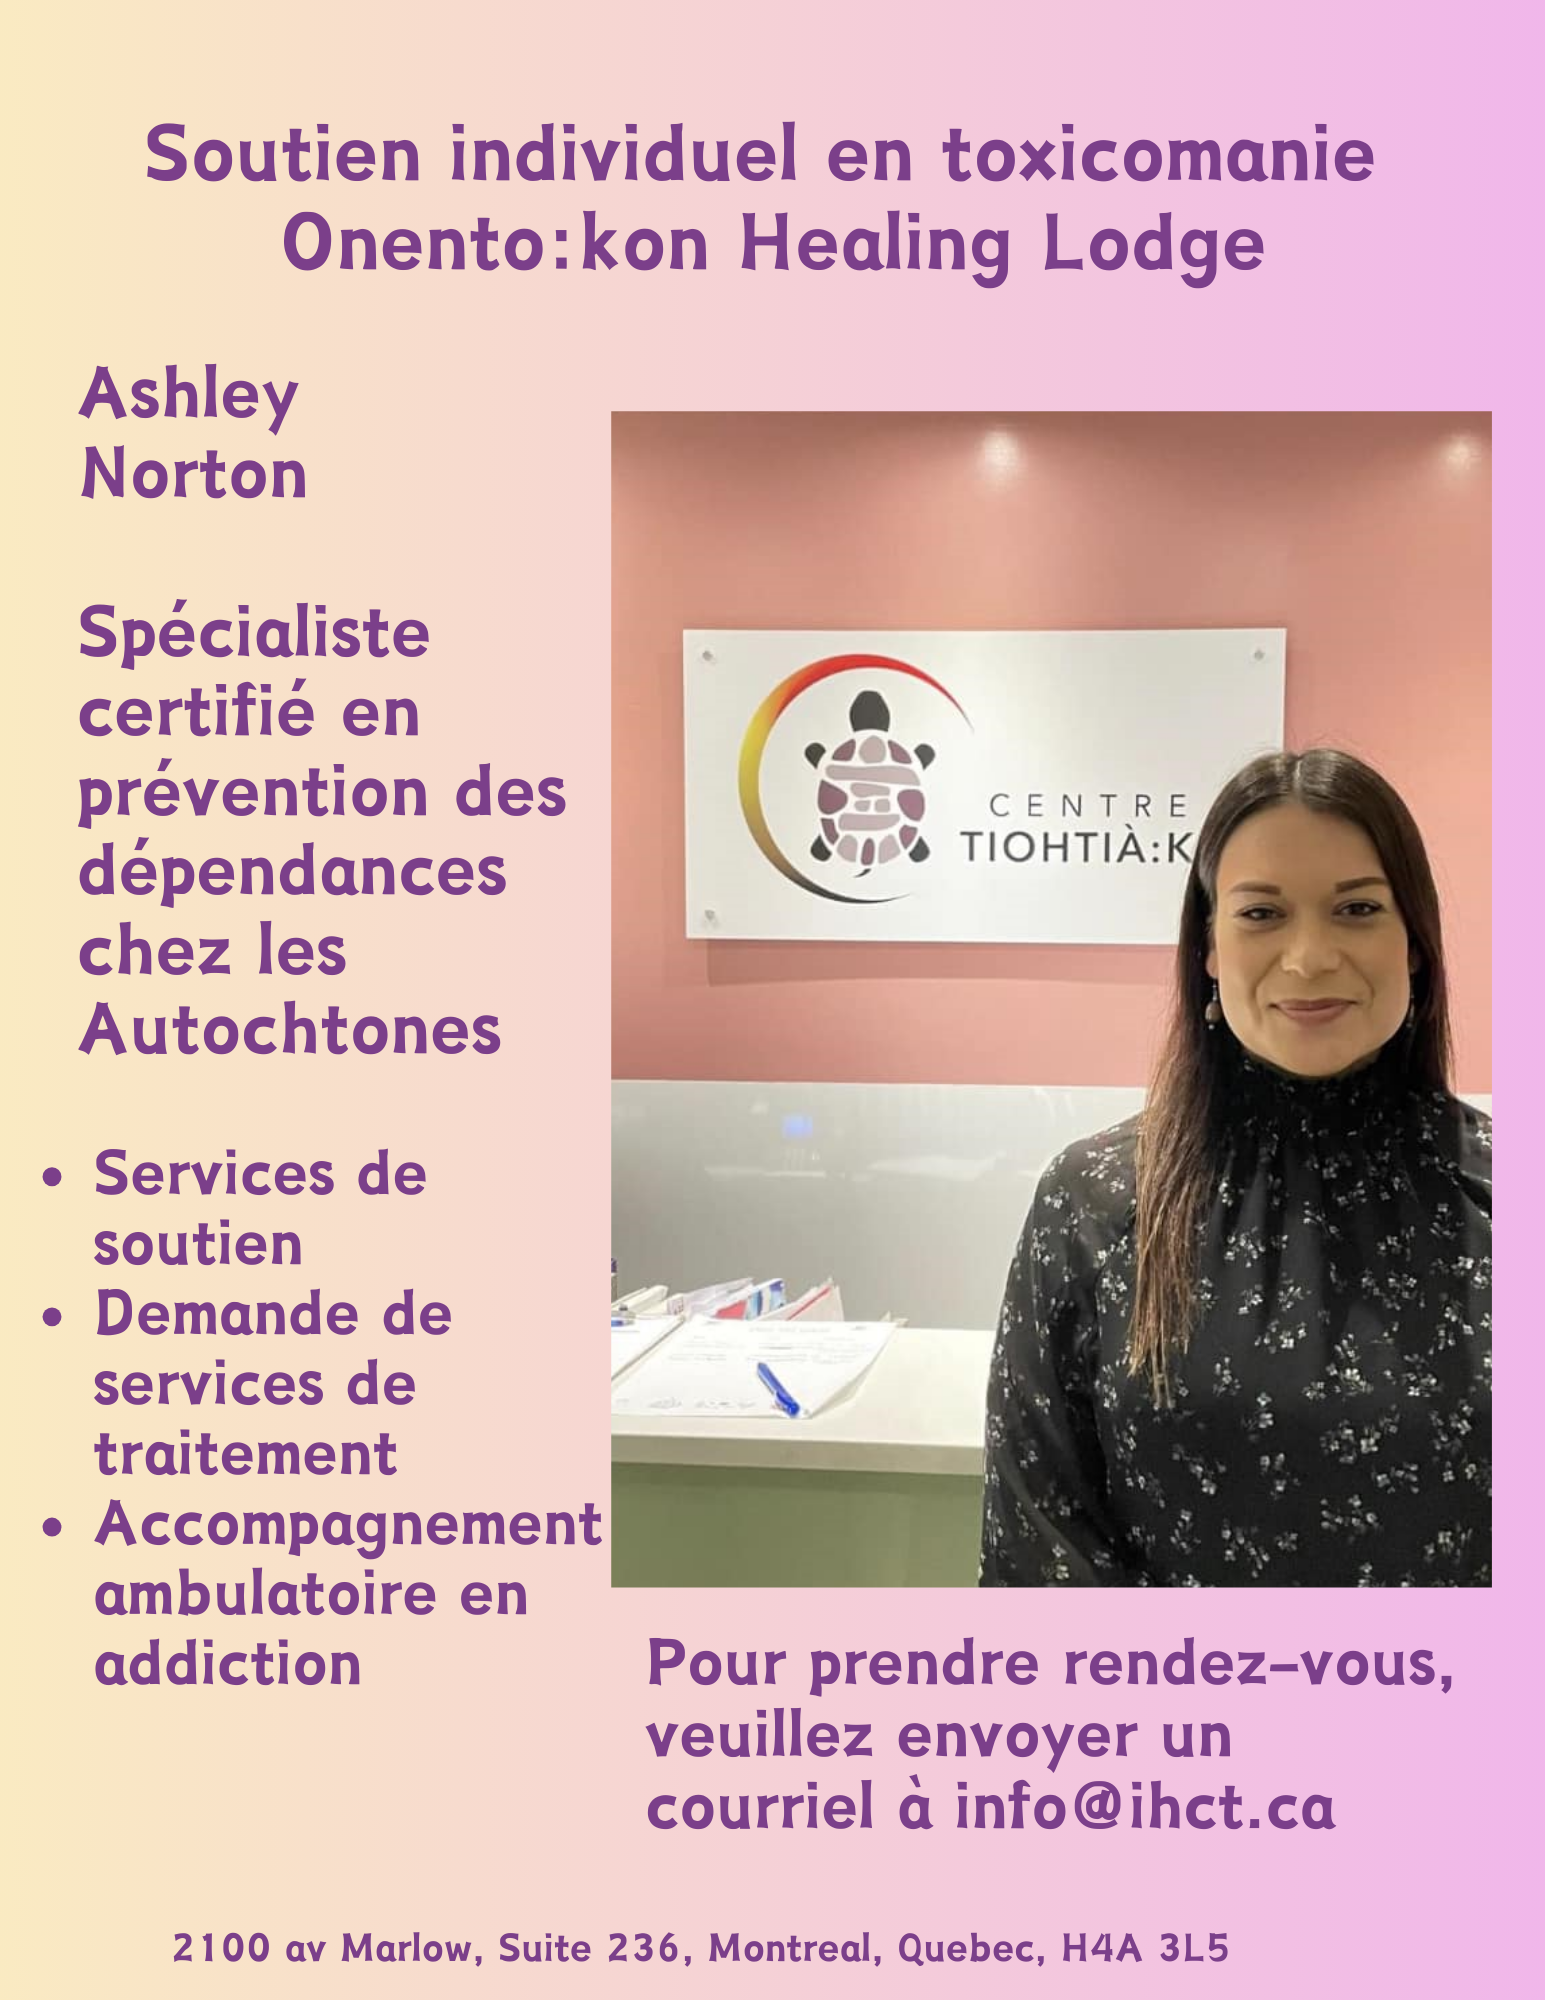 Individual Addiction Support From Onentokon Healing Lodge